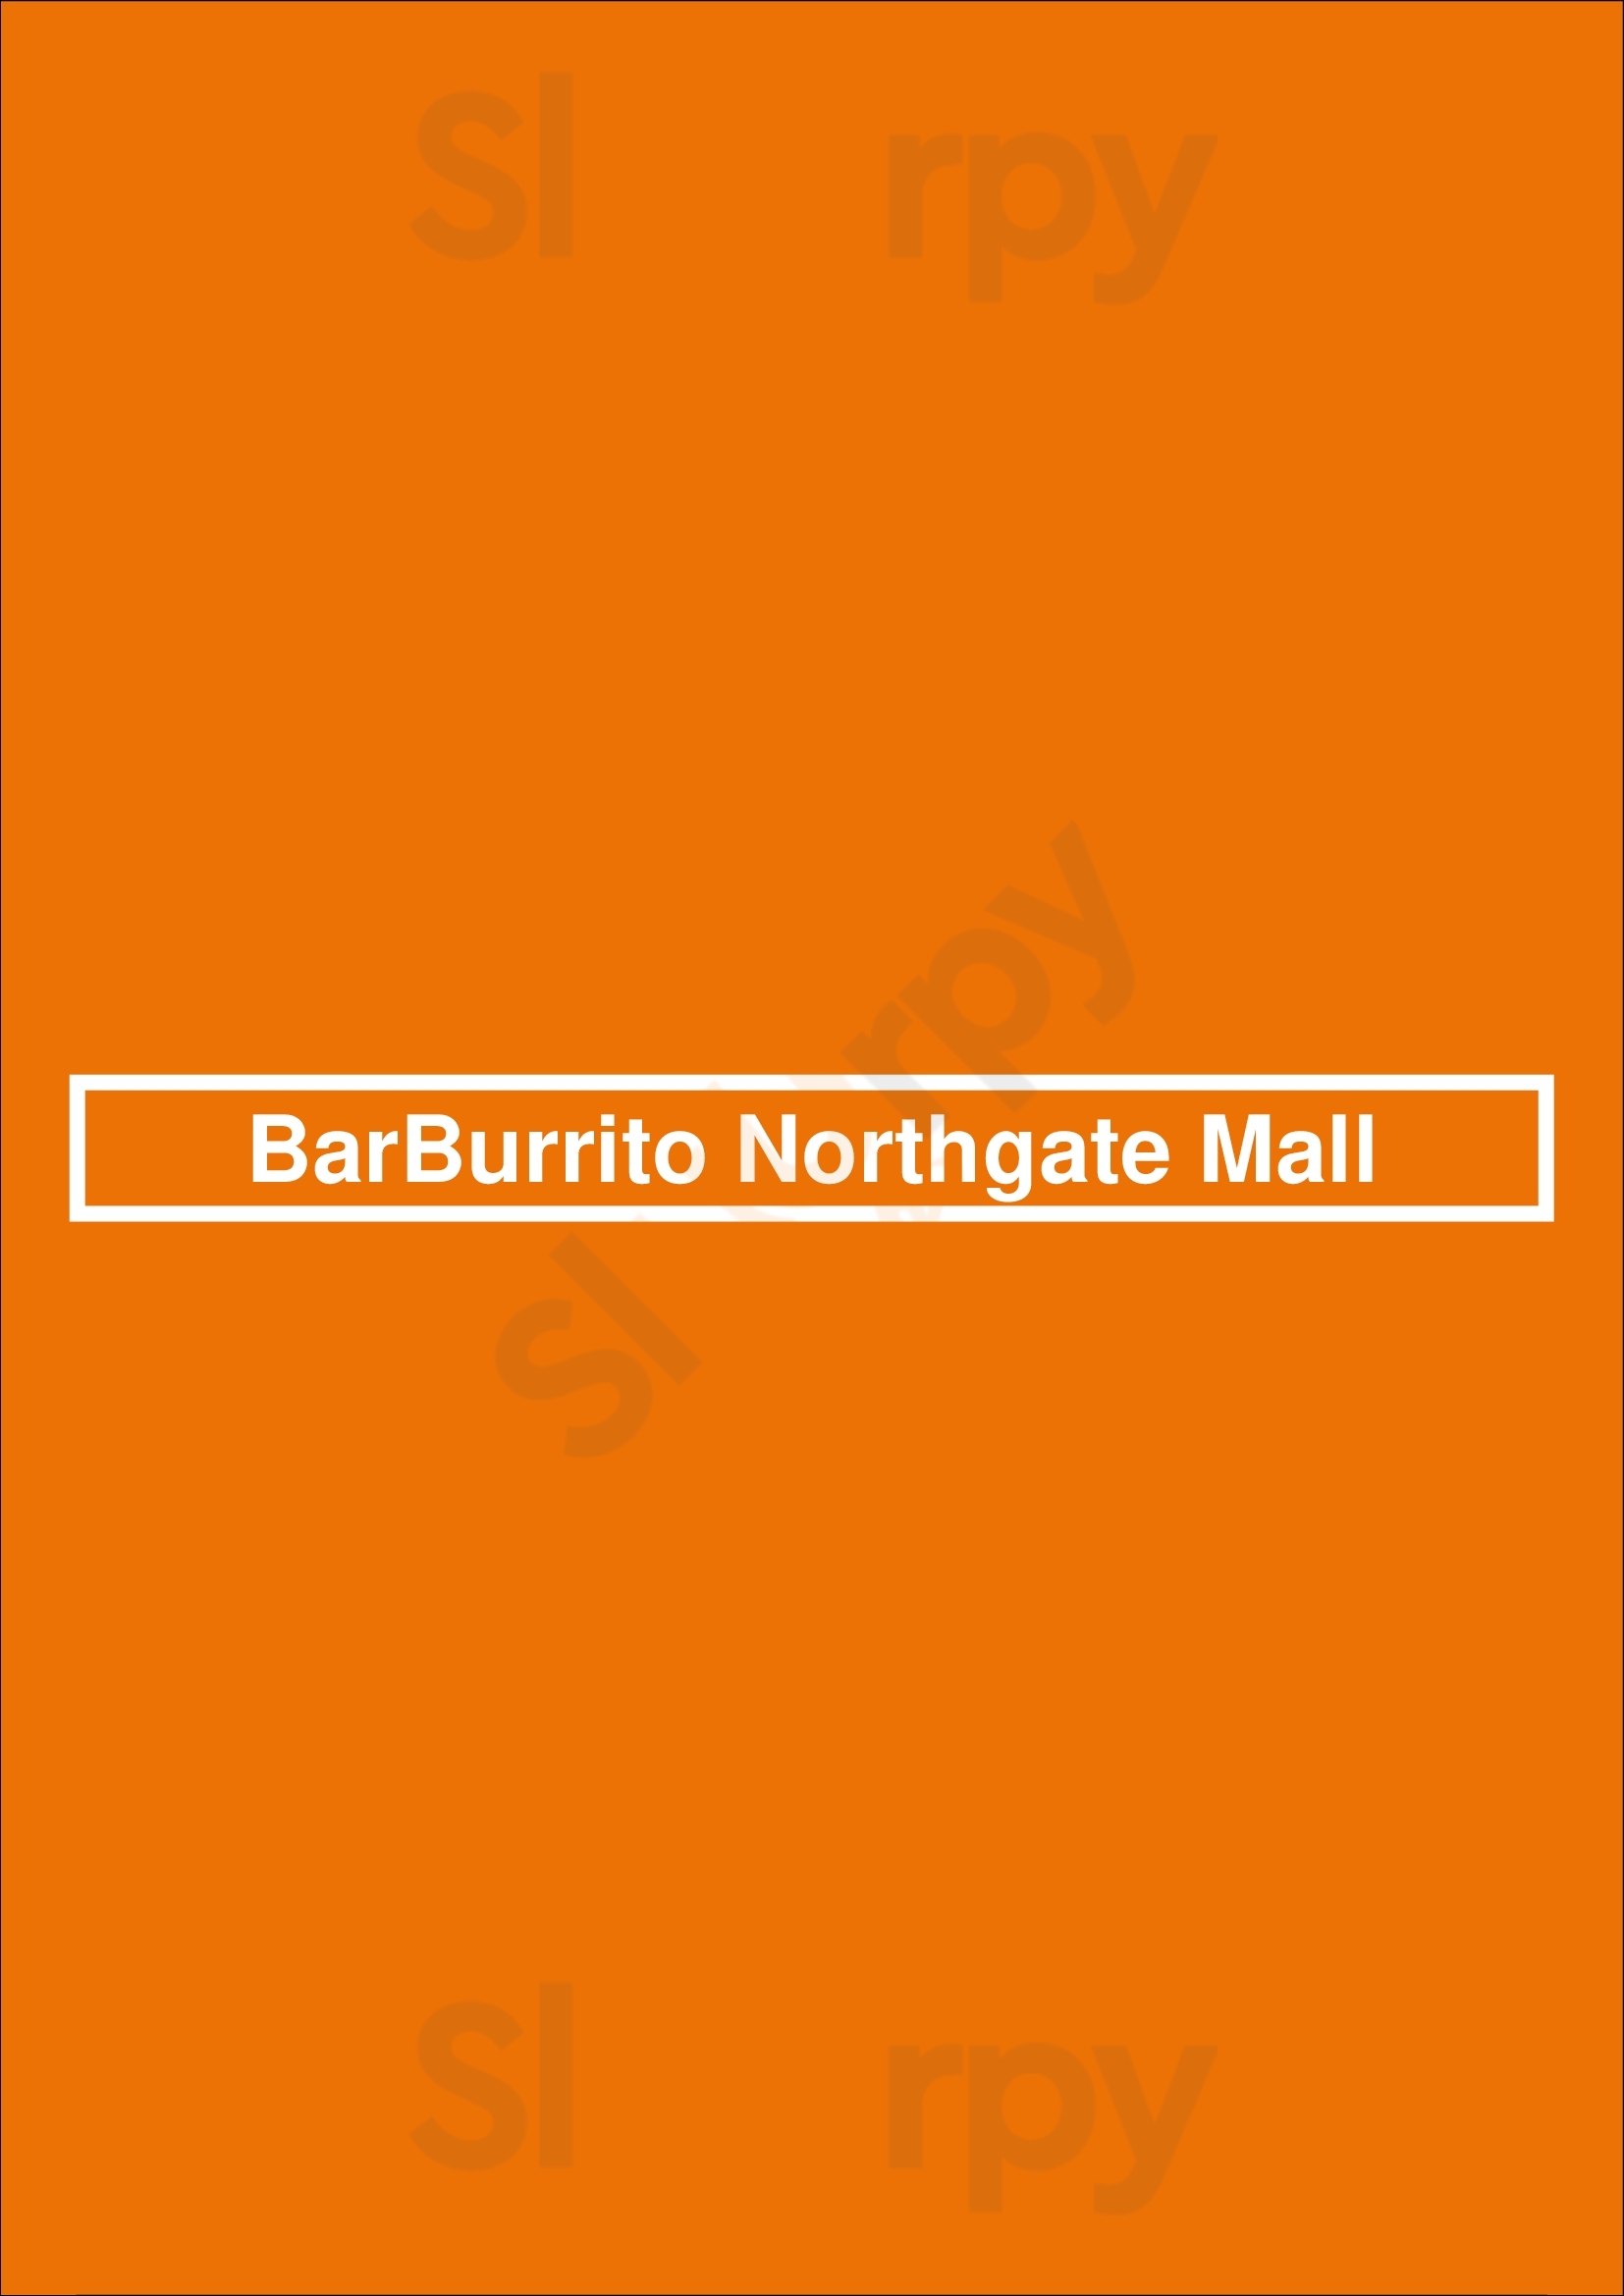 Barburrito Northgate Mall Winnipeg Menu - 1